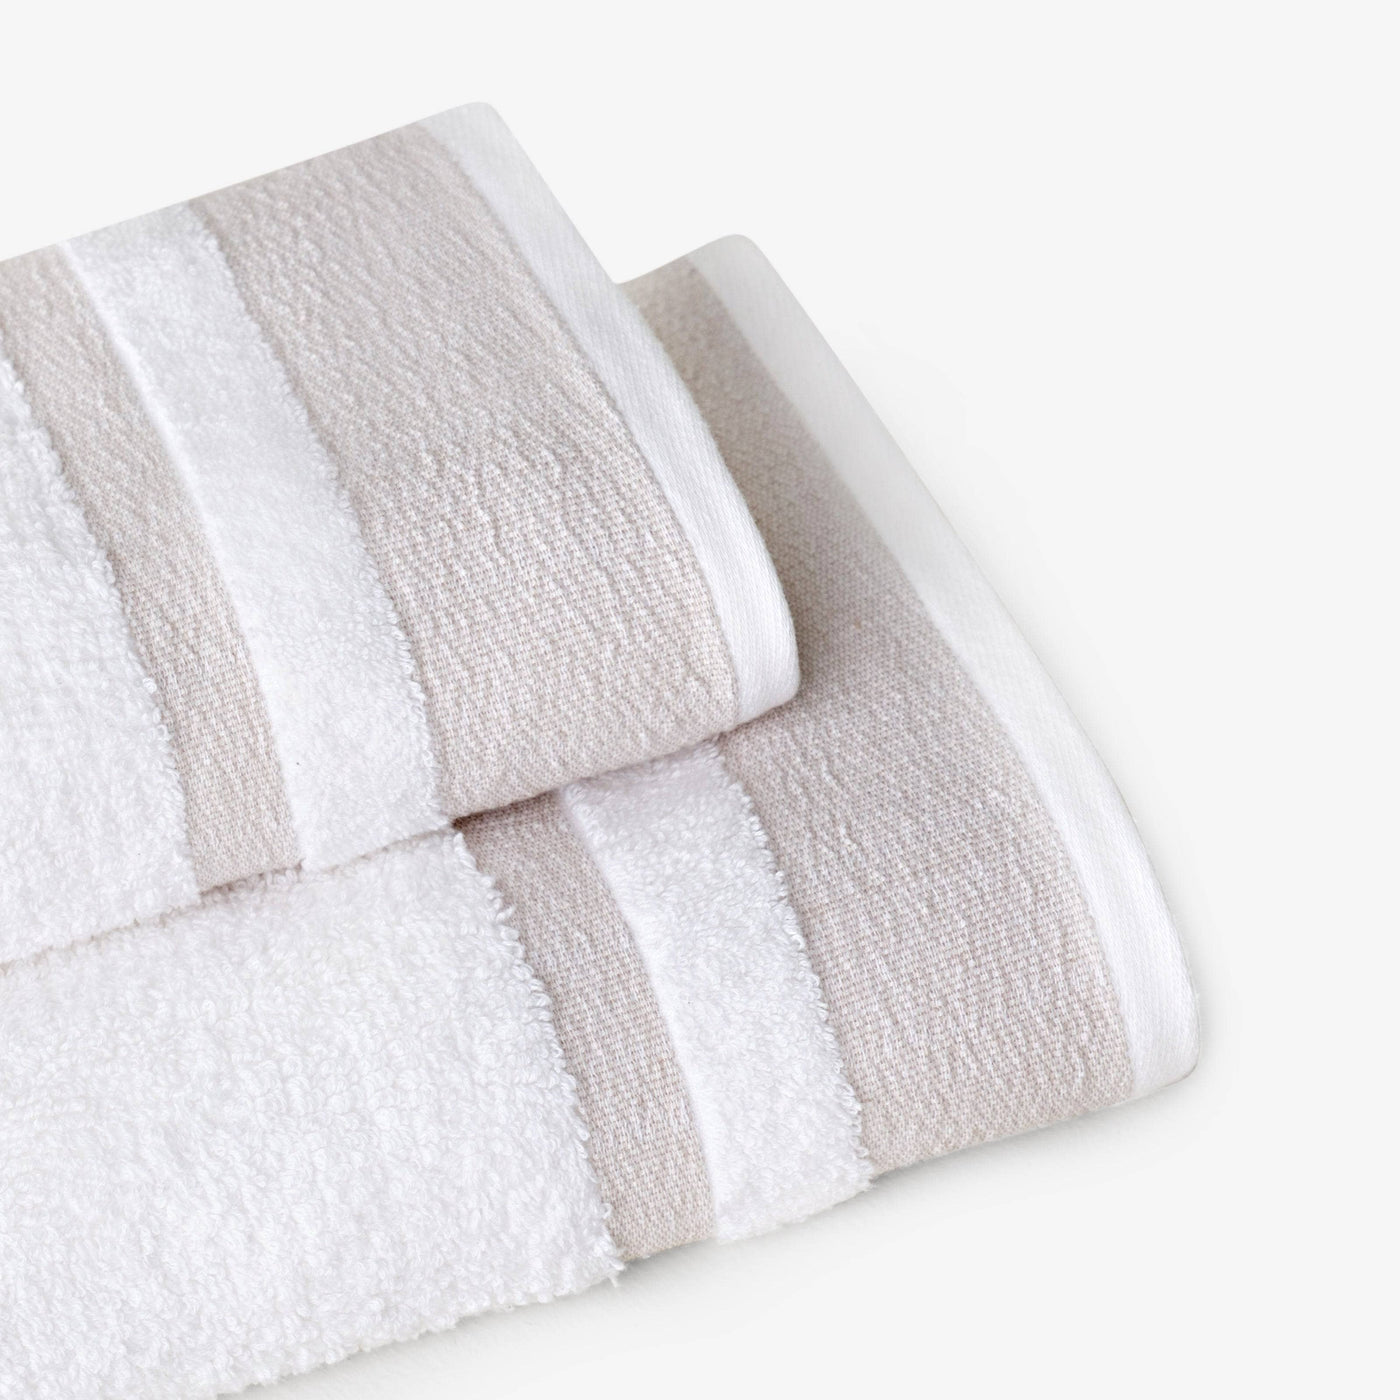 Charlotte Set of 2 Striped 100% Turkish Cotton Hand Towels, Beige Hand Towels sazy.com